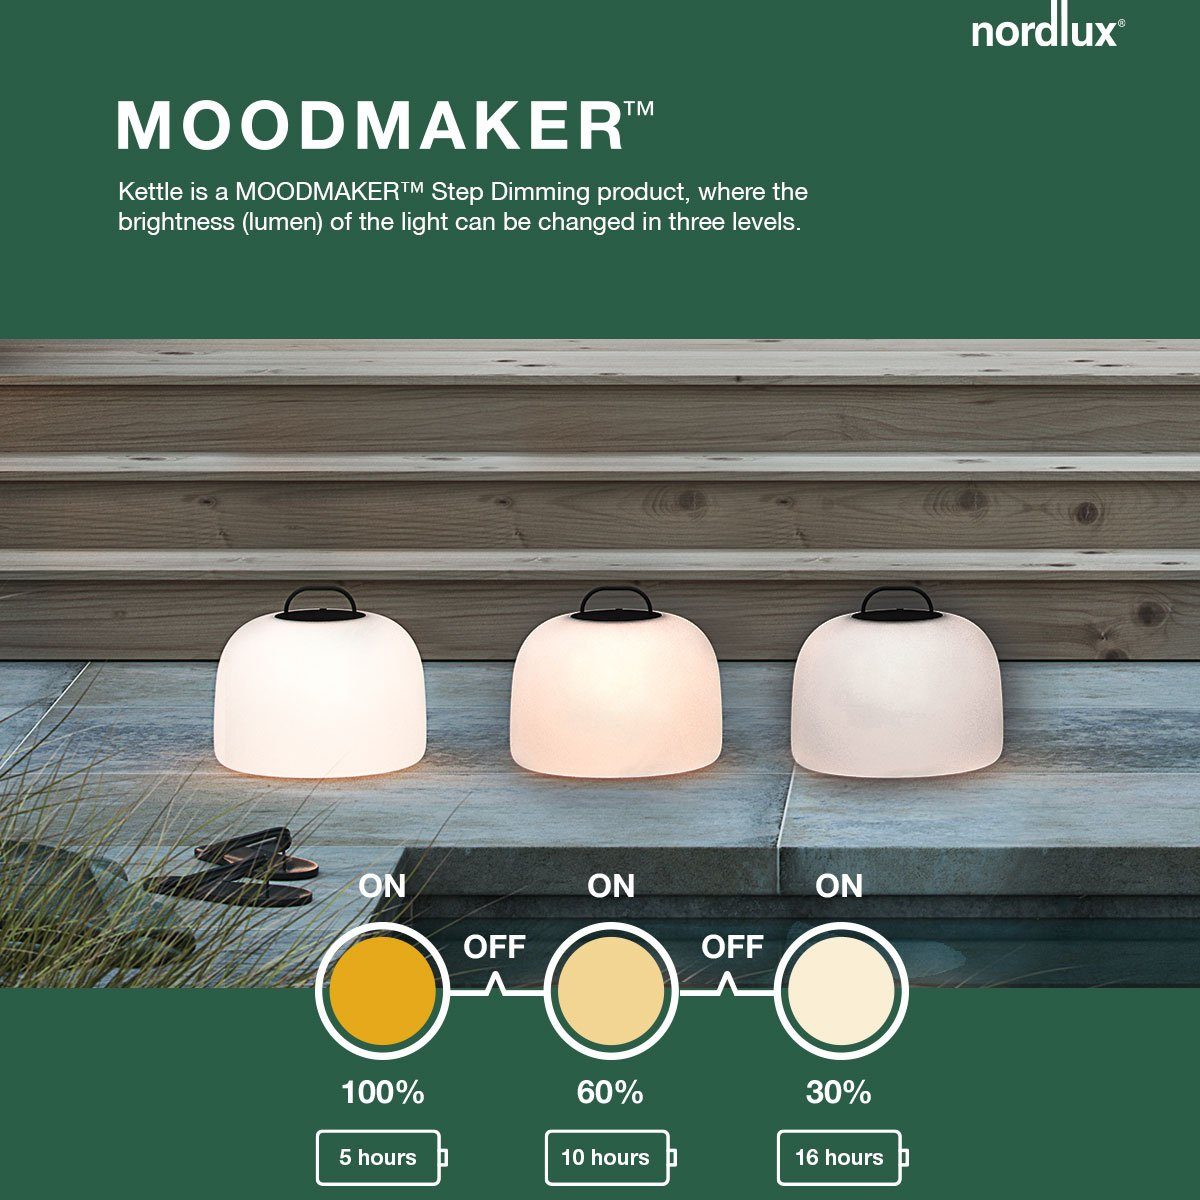 Nordlux LED Stehlampe Kettle, Dimmer, mit integriert, Warmweiß, LED und fest LED, Innen USB-Anschluss inkl. Außen Ladefunktion, Batterie, integrierter Dimmfunktion, Dimmer